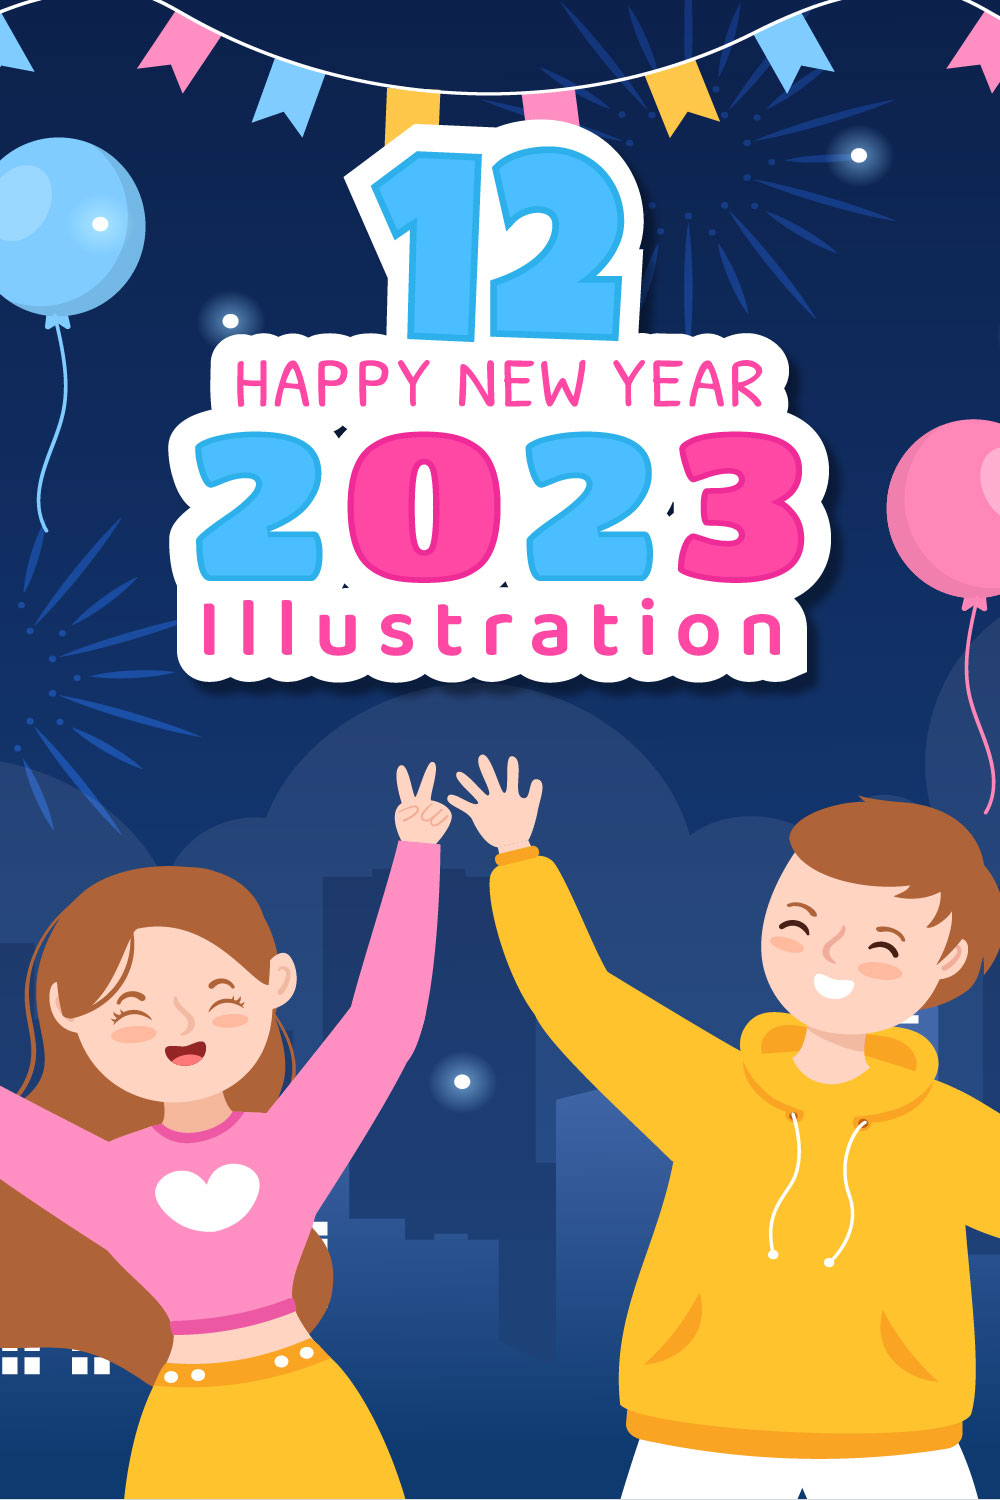 12 Happy New Year 2023 Illustration pinterest image.